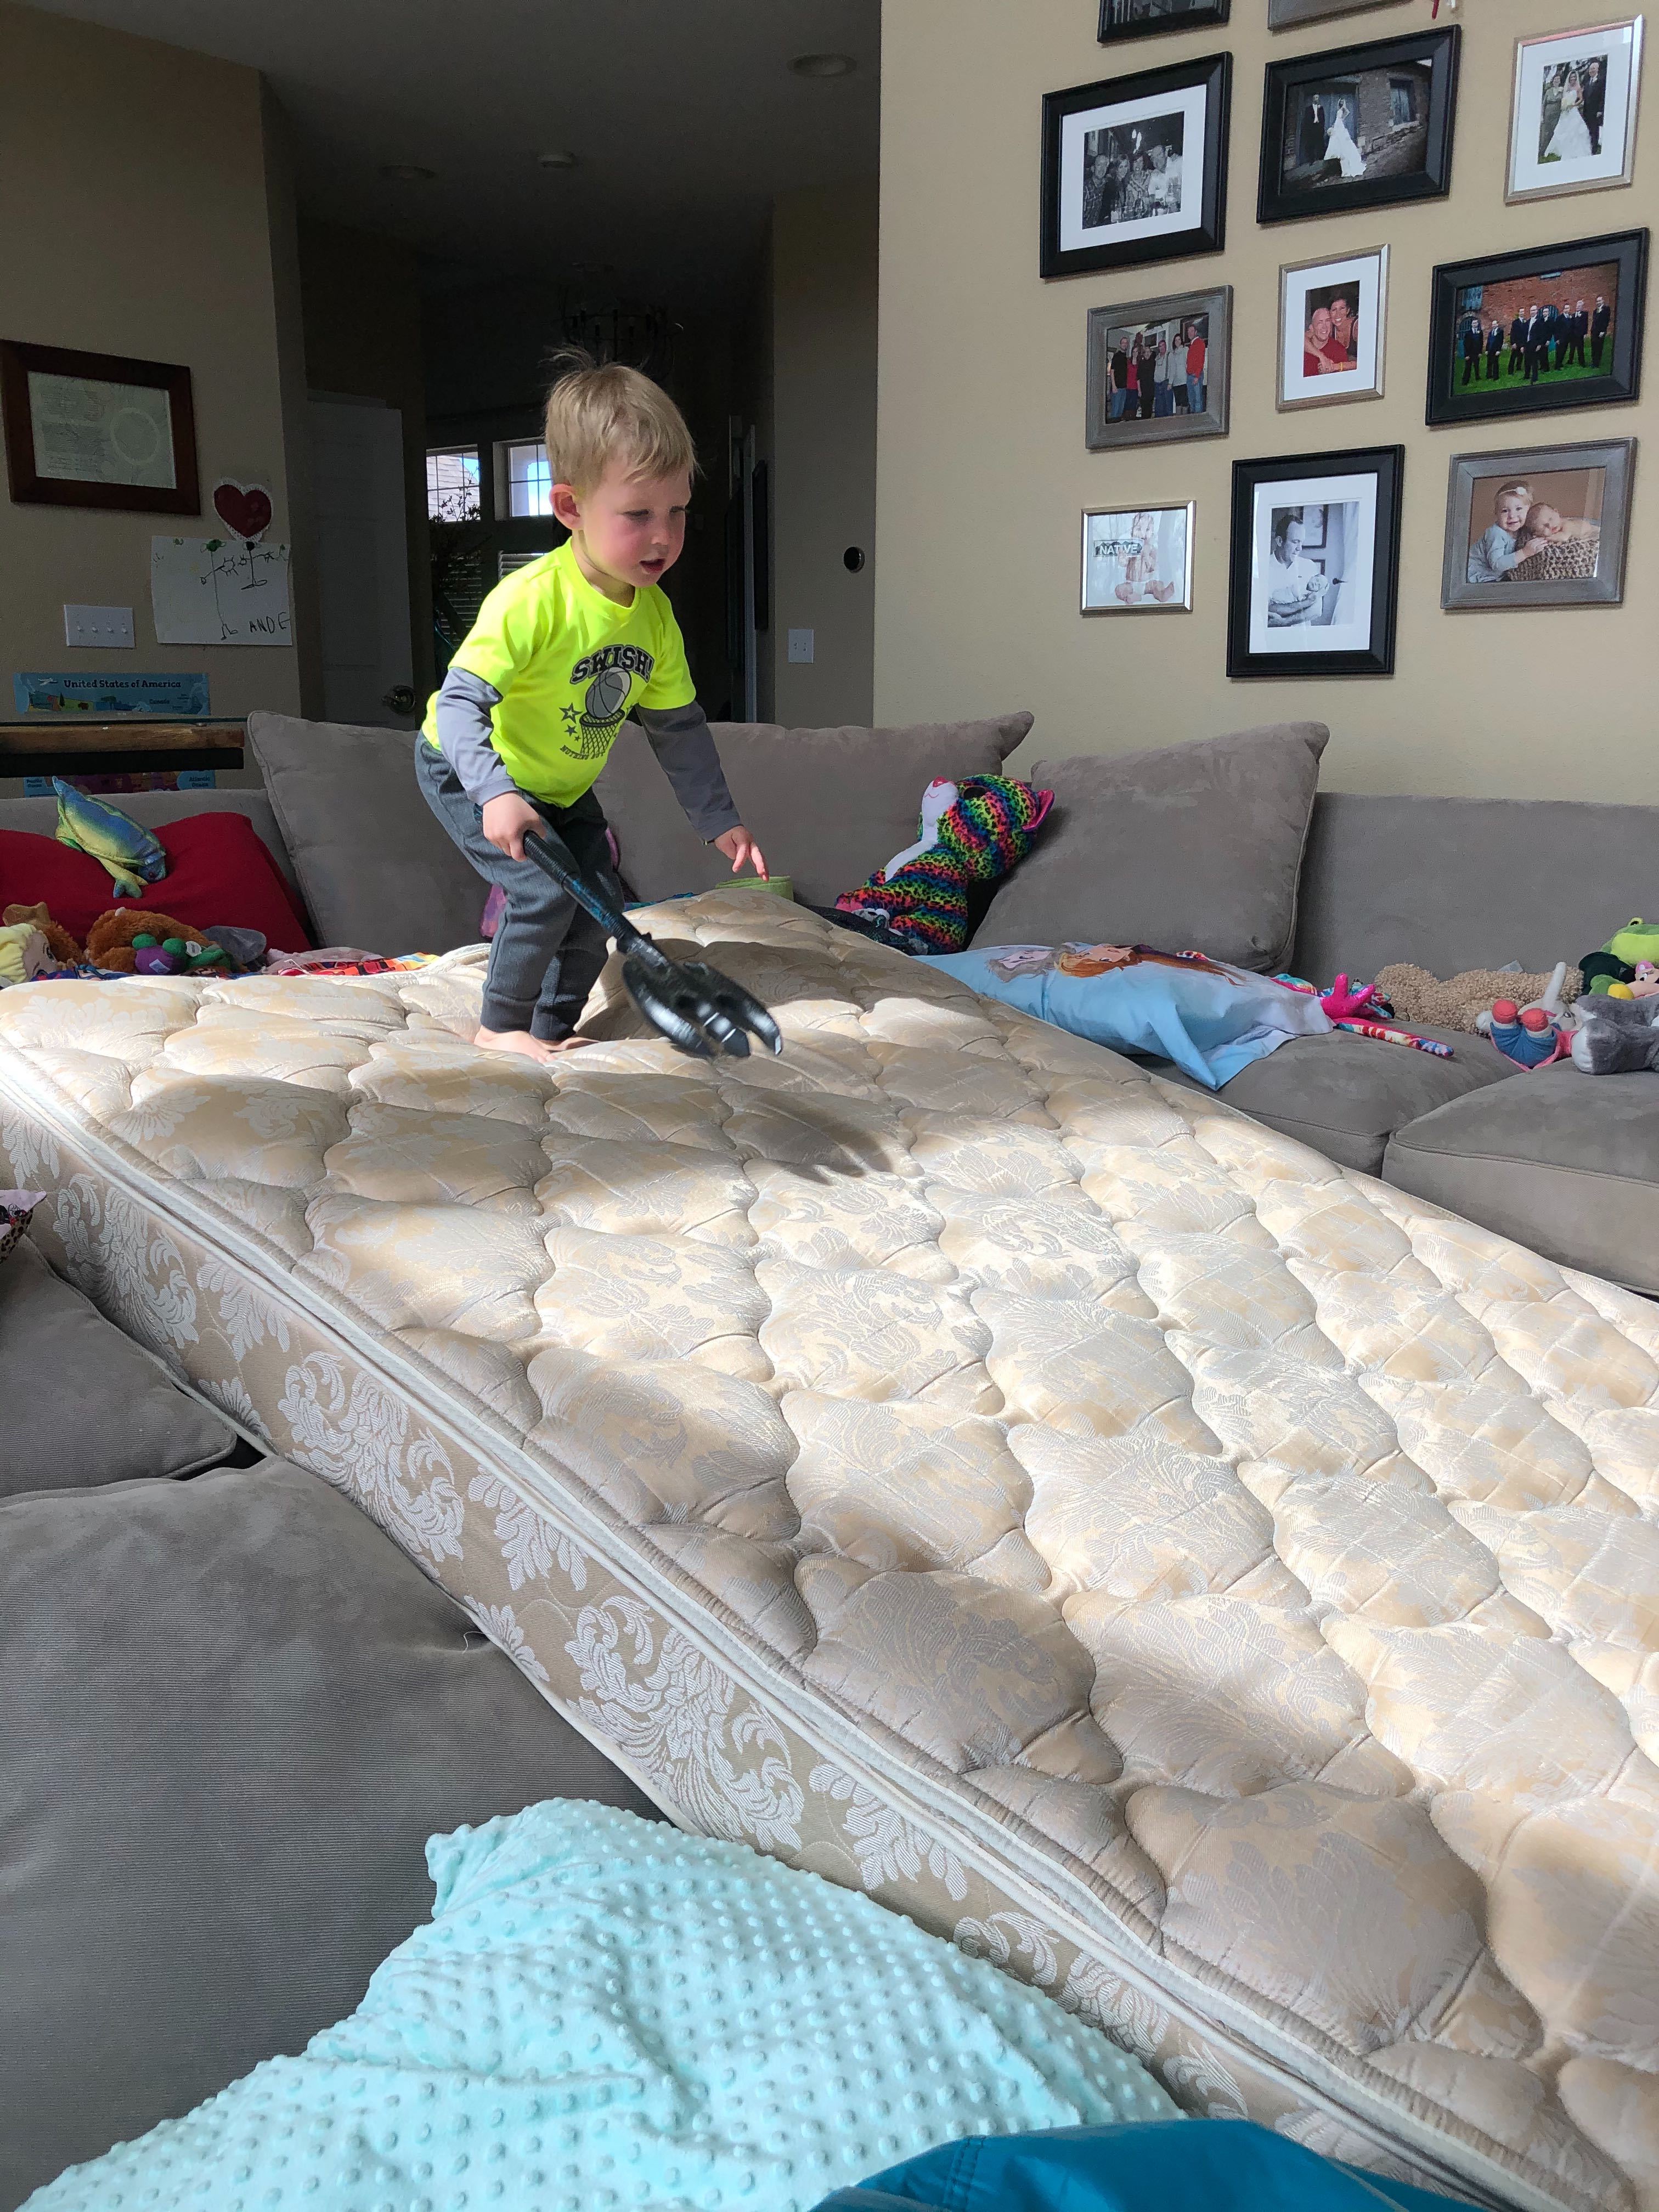 A young boy runs down a mattress mountain